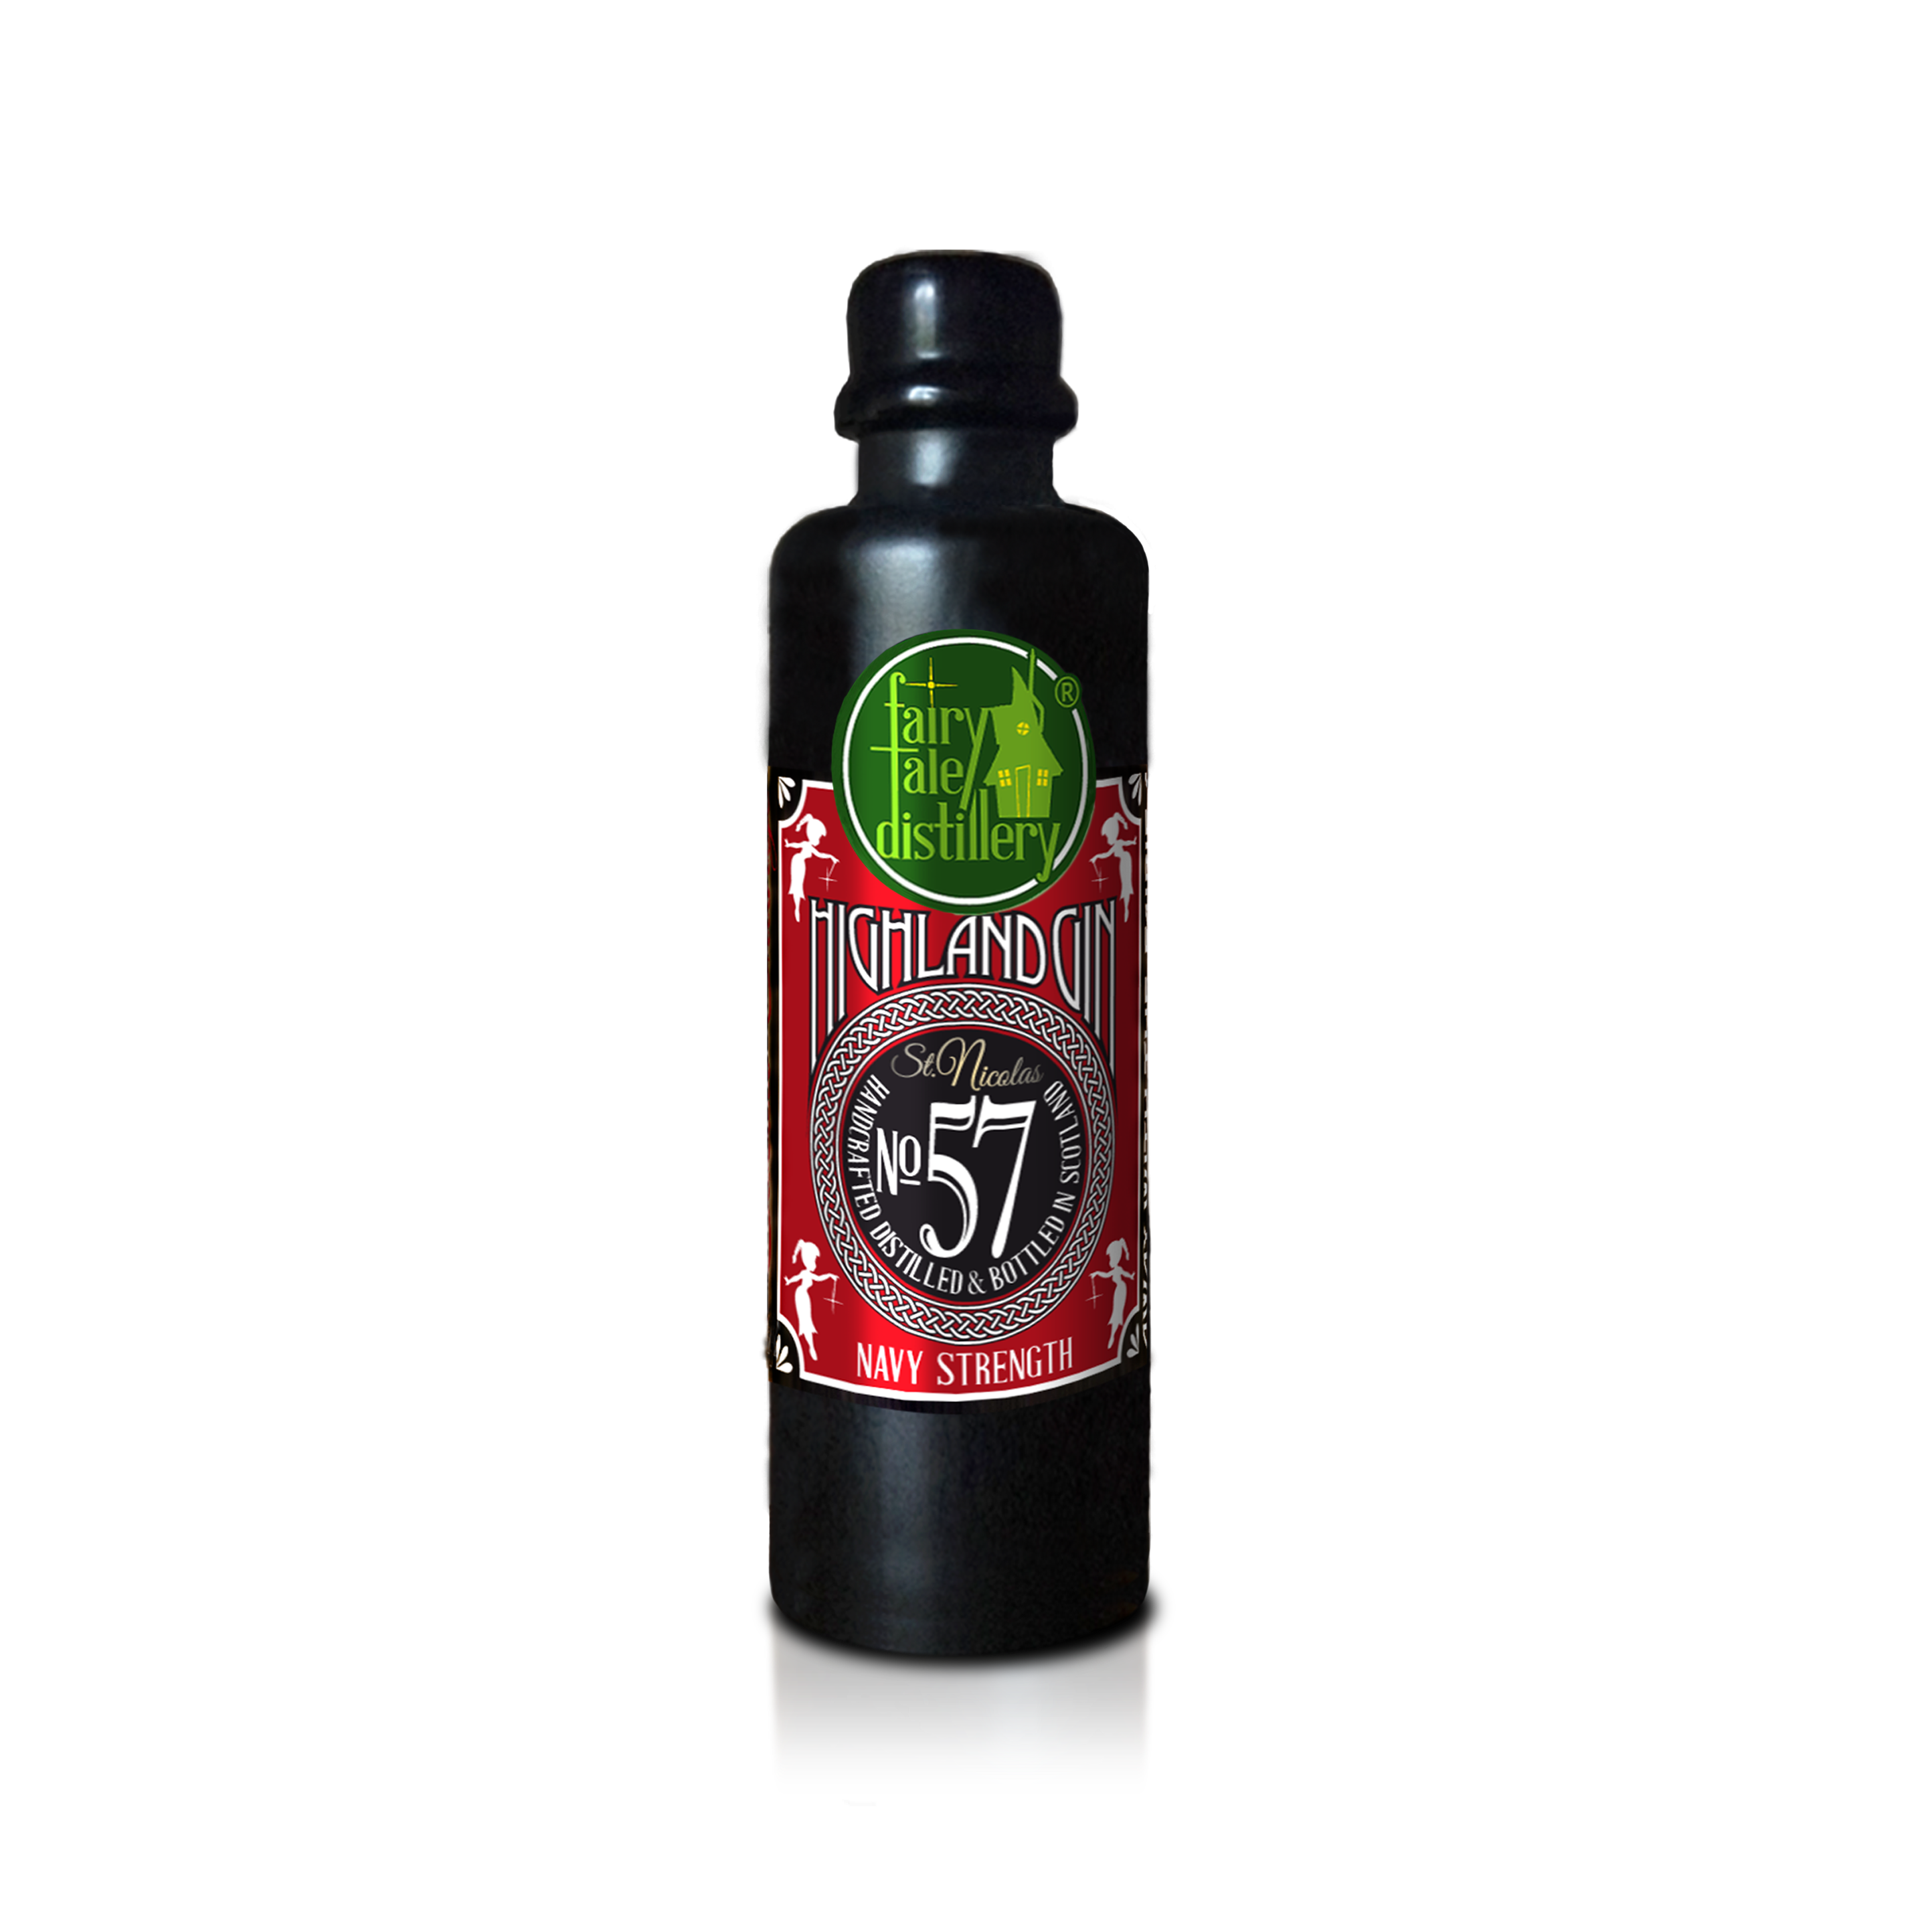 No 57 St. Nicolas Navy Strength Highland Gin bottle 0,2l from Fairytale Distillery